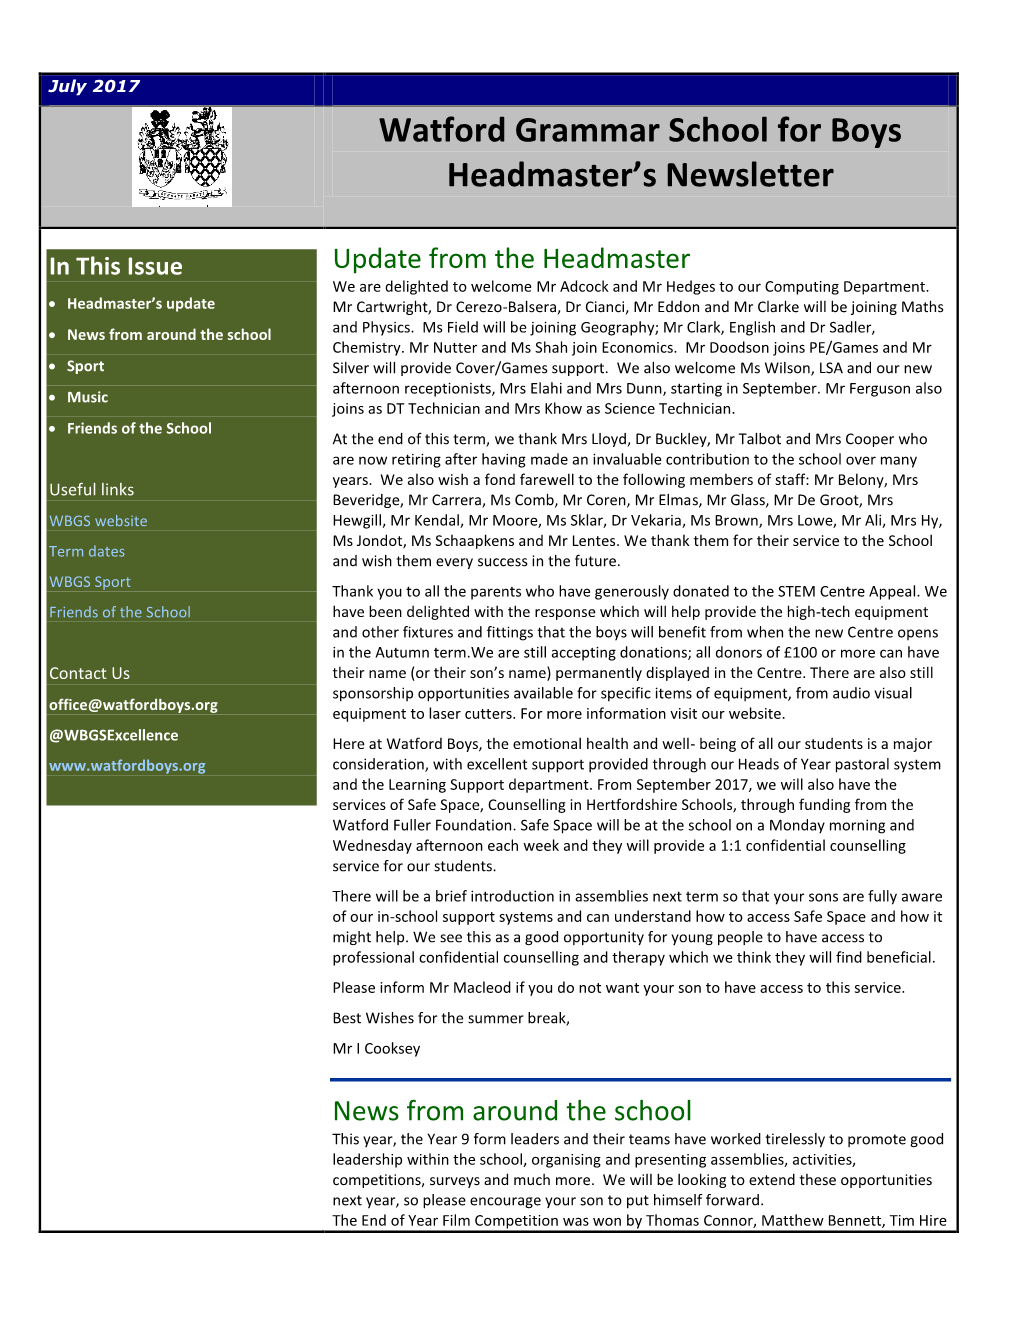 Watford Grammar School for Boys Headmaster's Newsletter